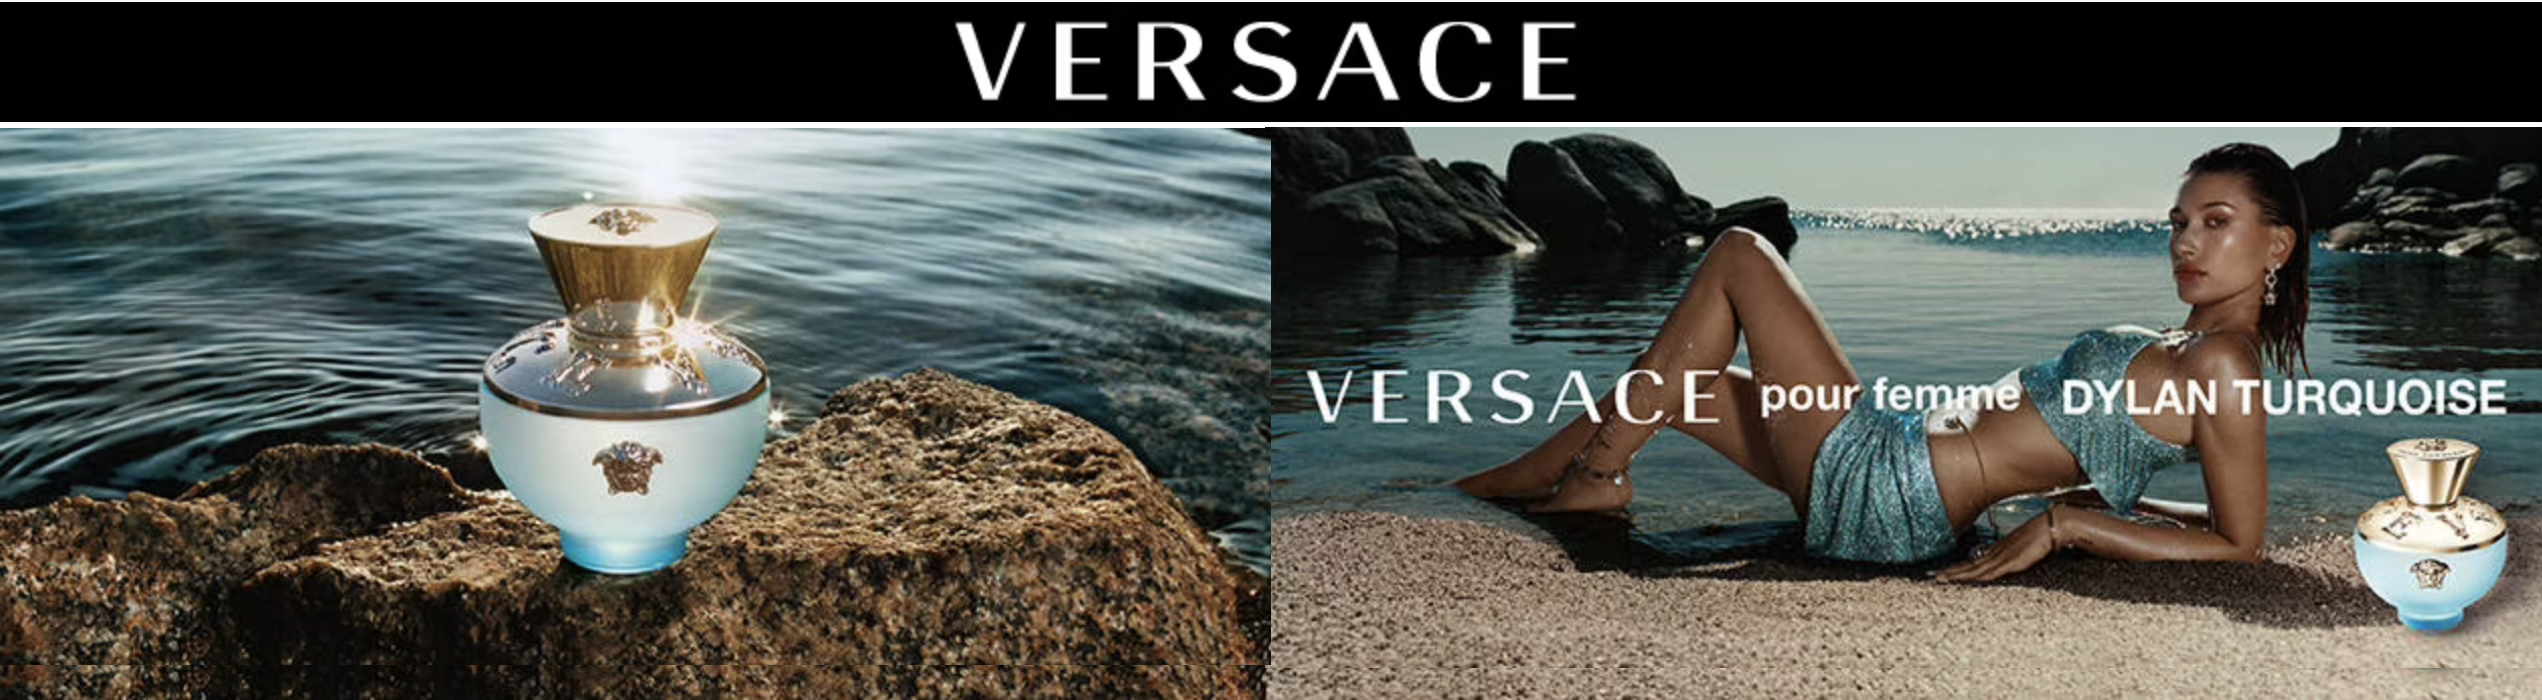 versace-parfum.png (2.50 MB)